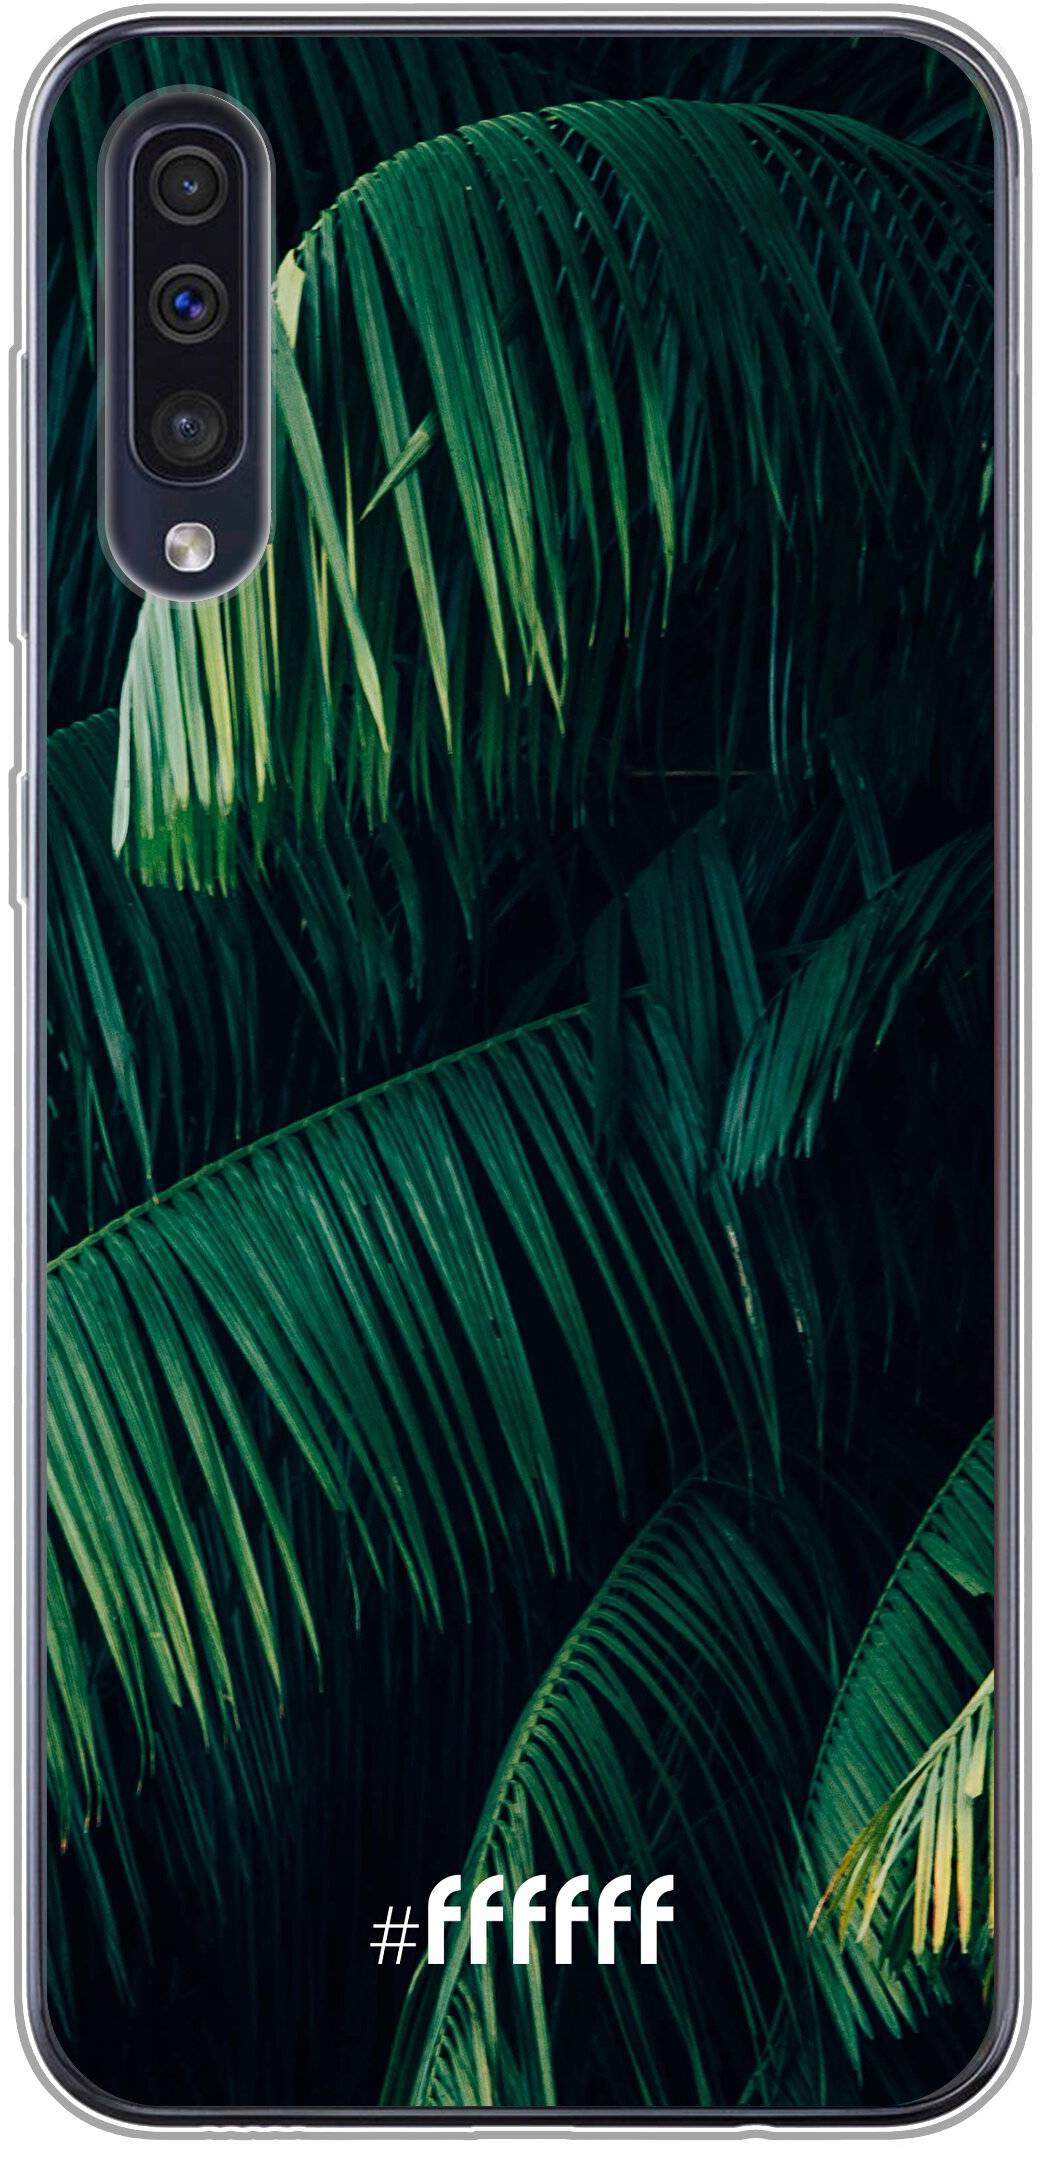 Palm Leaves Dark Galaxy A50s